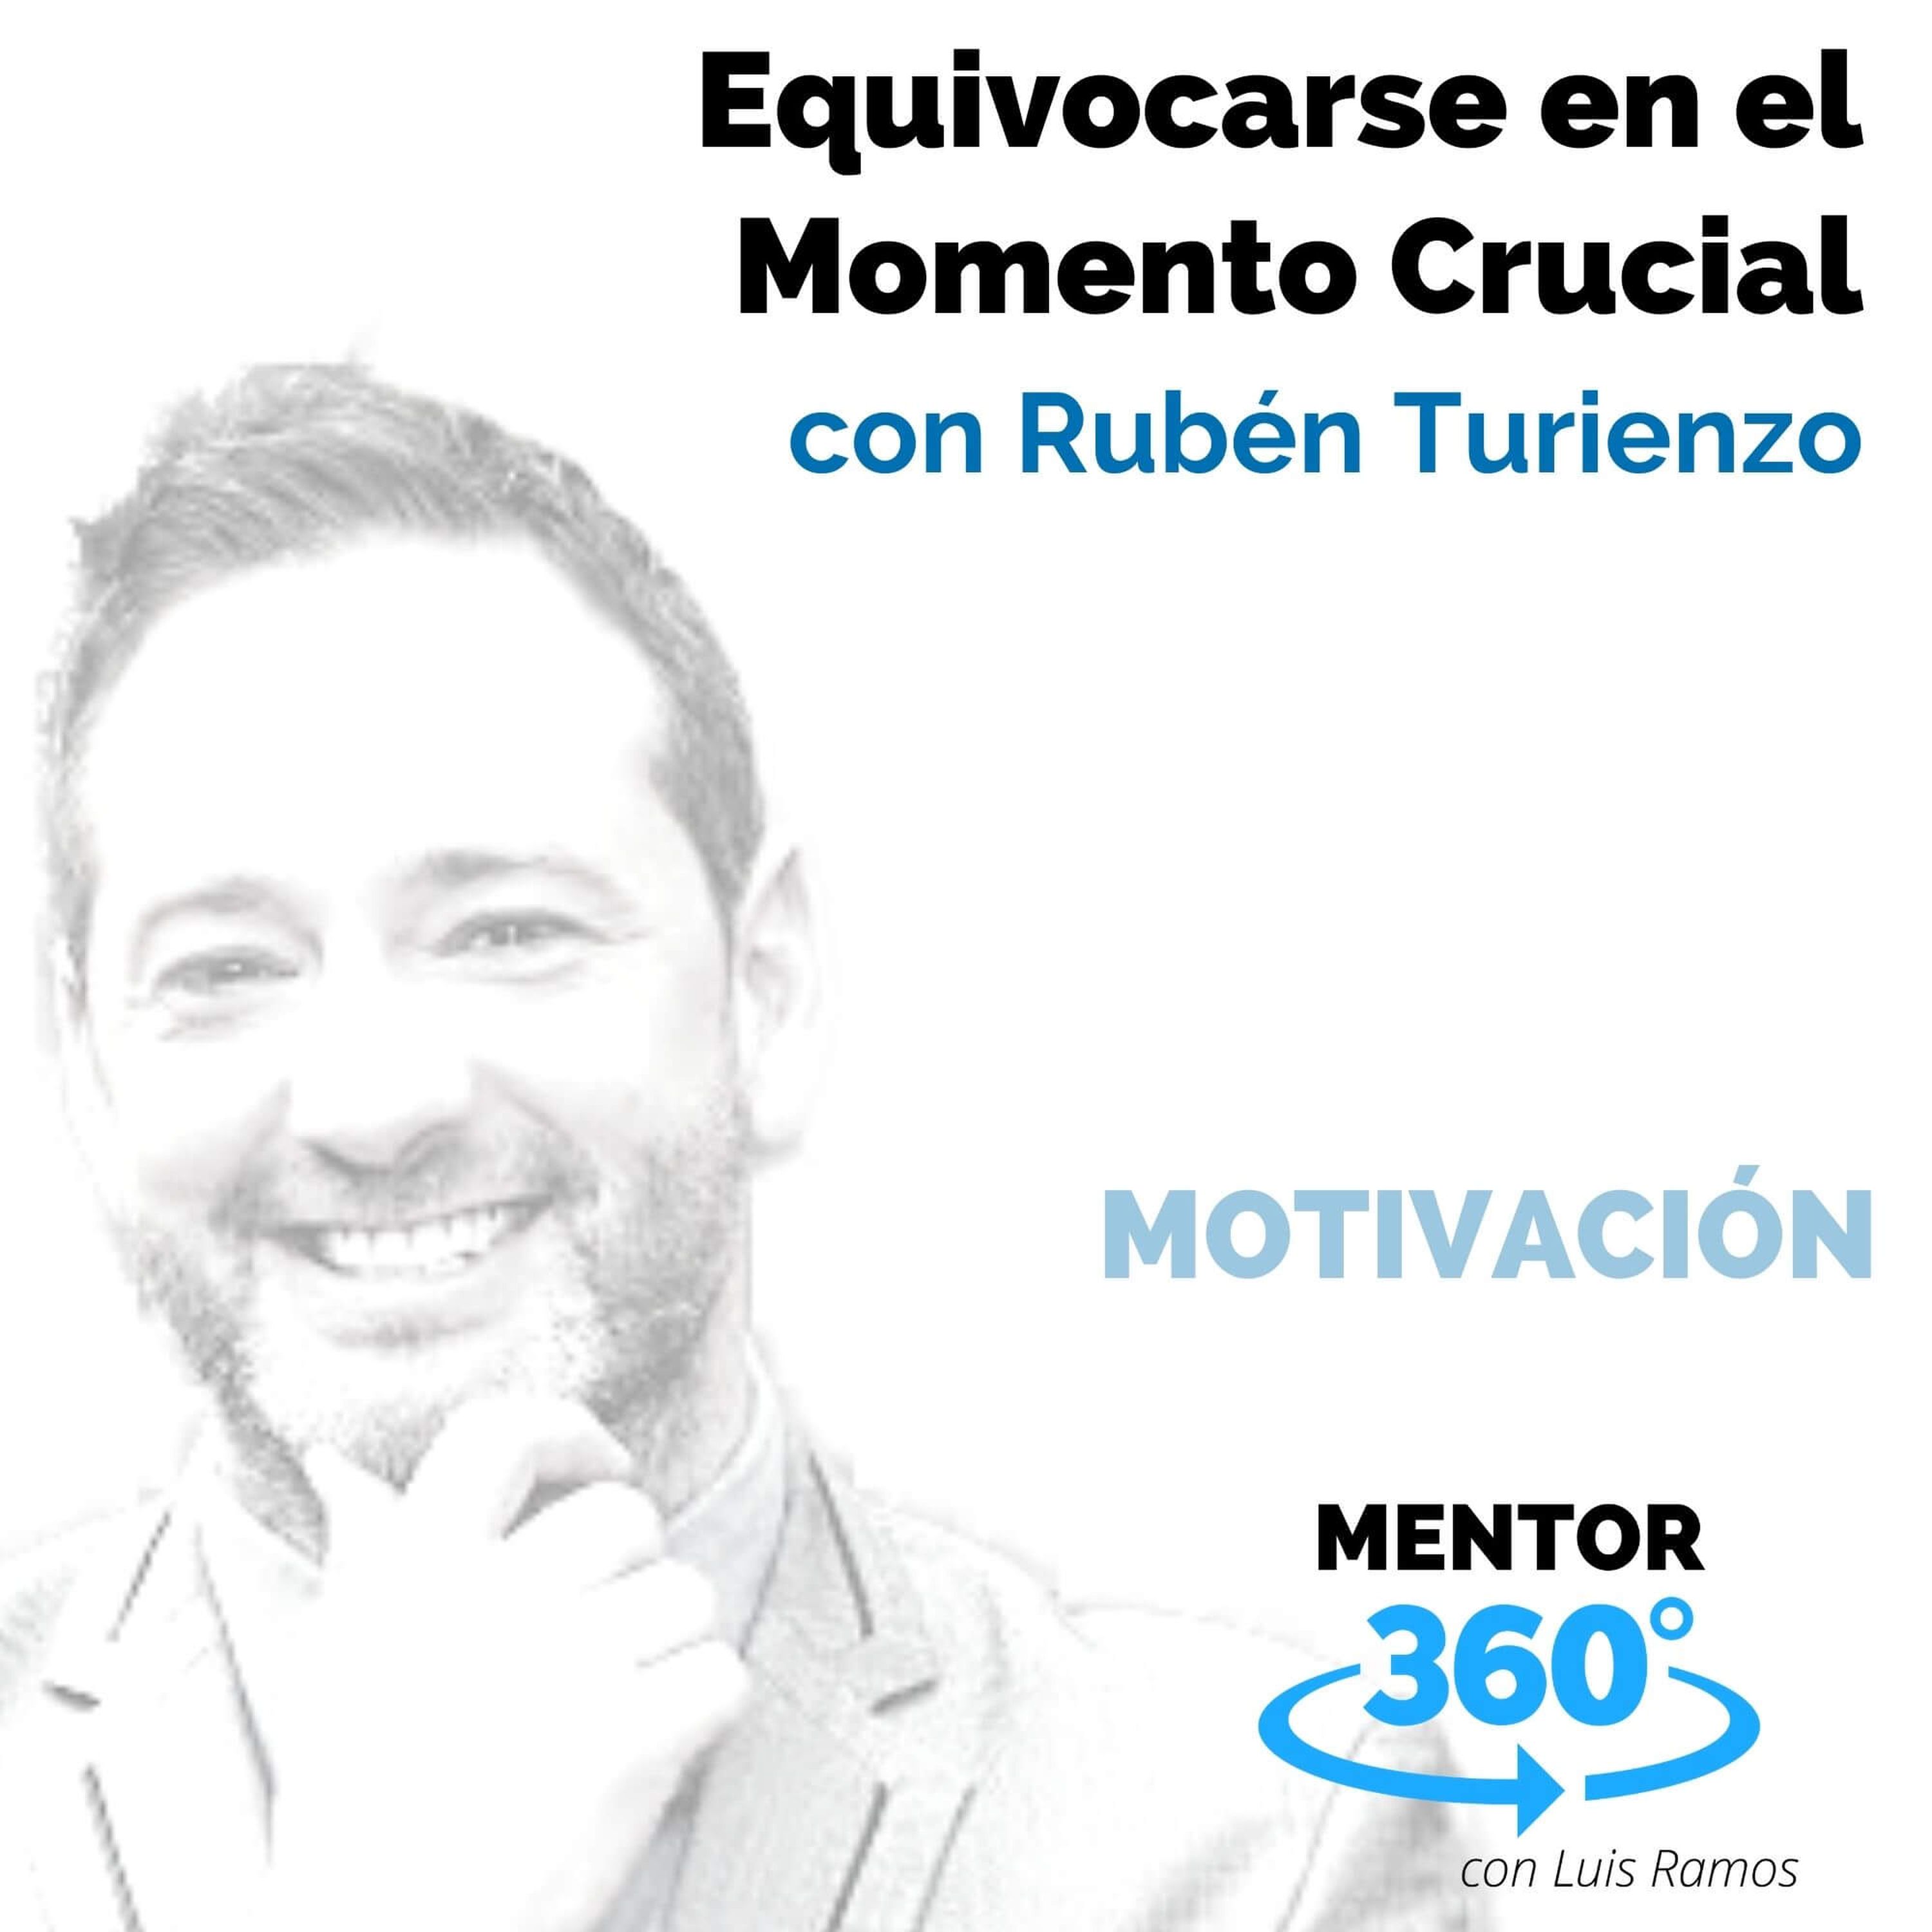 Equivocarse en el Momento Crucial, con Rubén Turienzo - MENTOR360